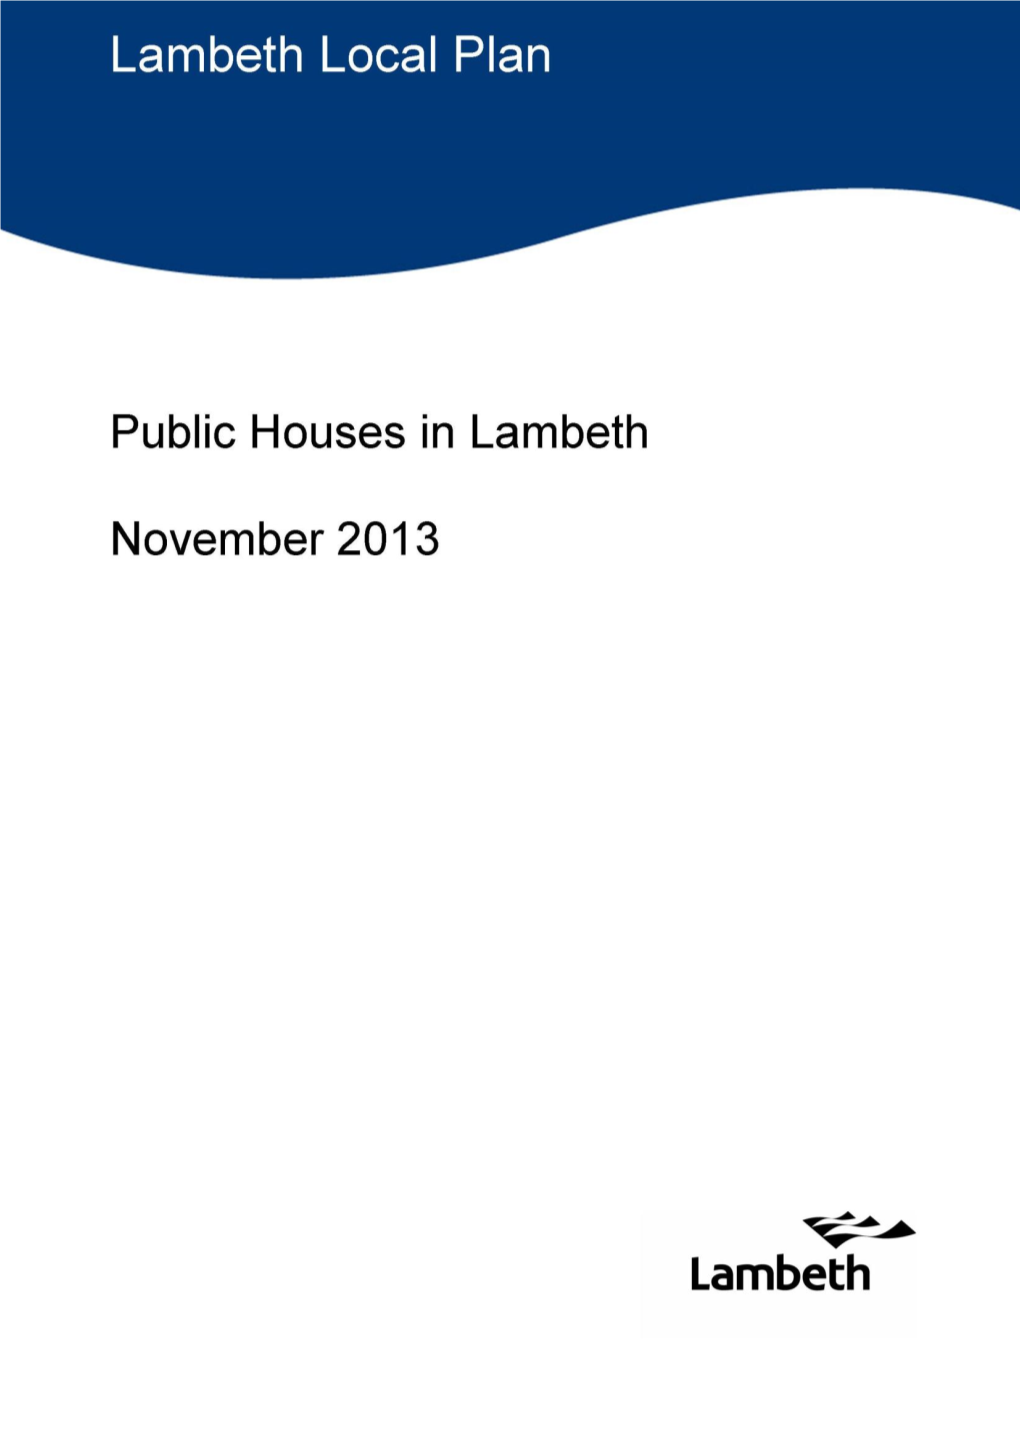 Public Houses in Lambeth 2